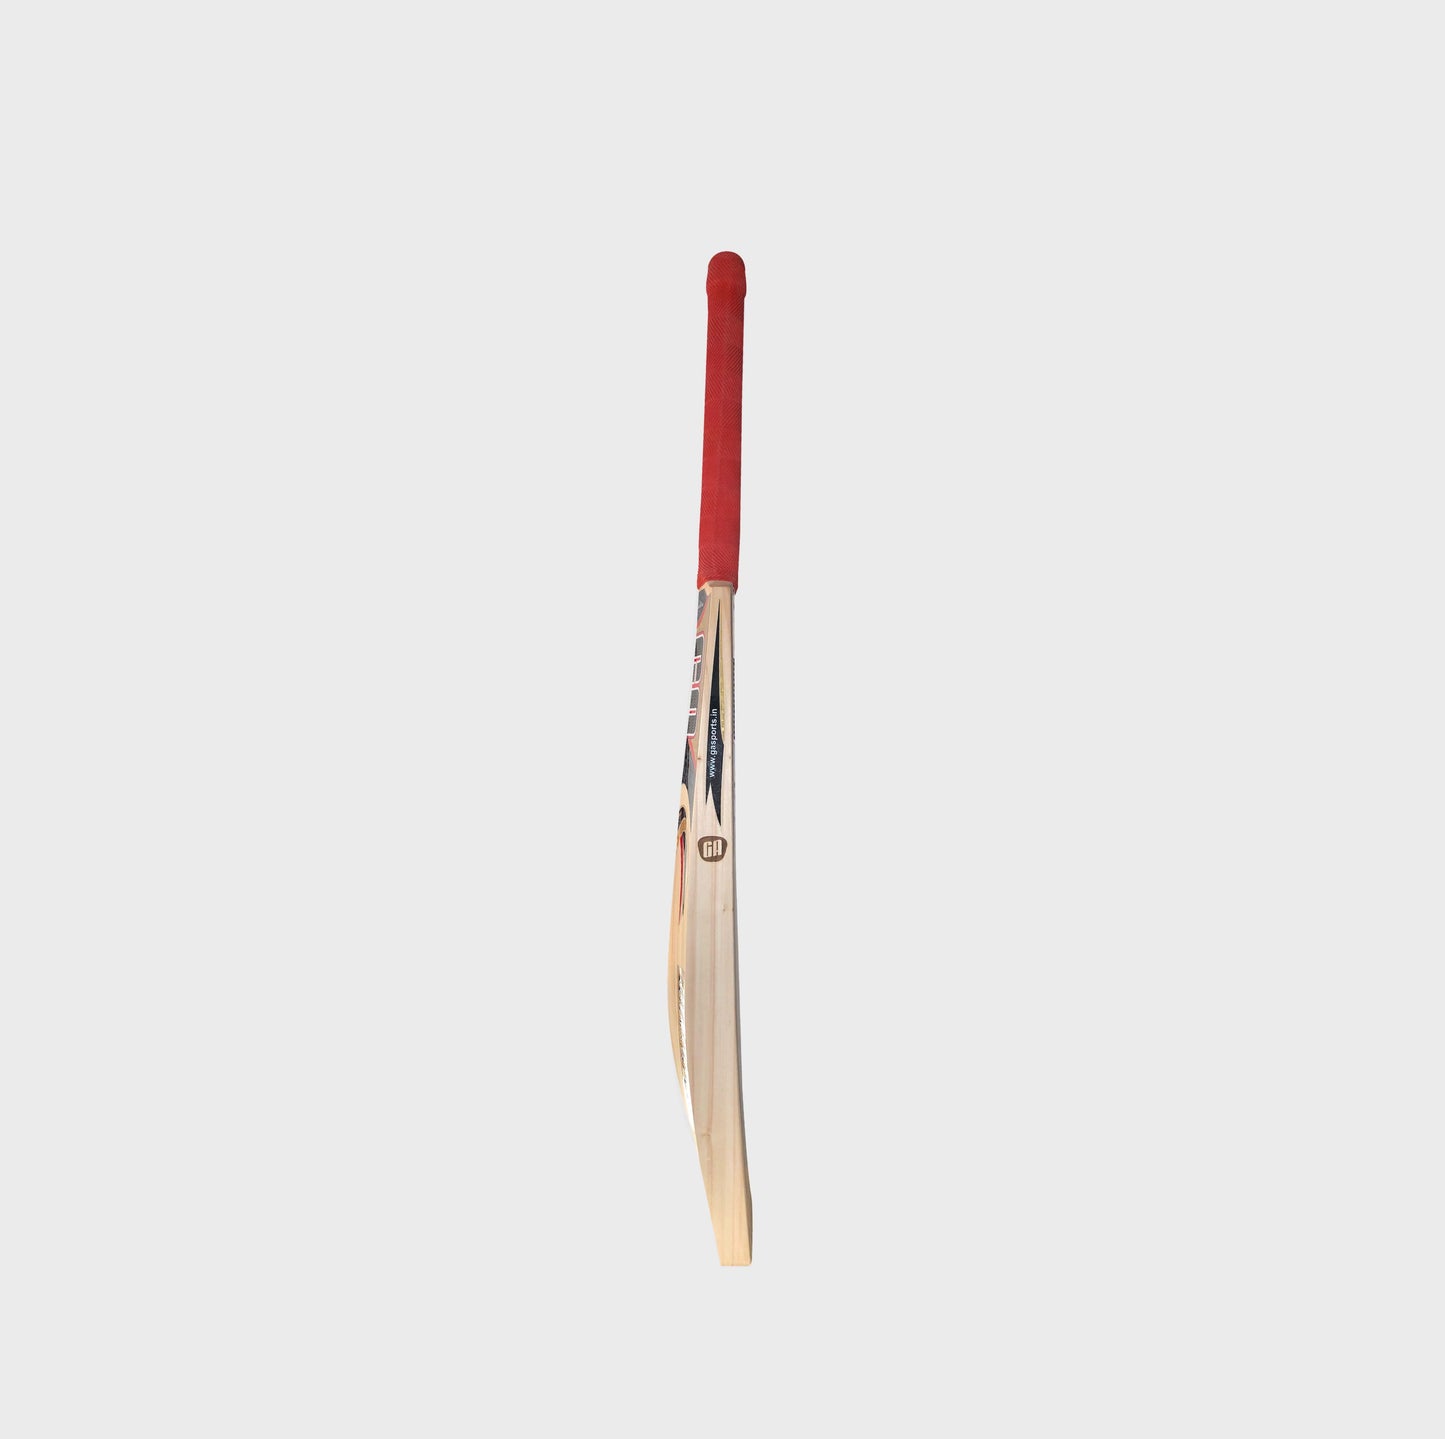 GA Warrior English Willow Cricket Bat